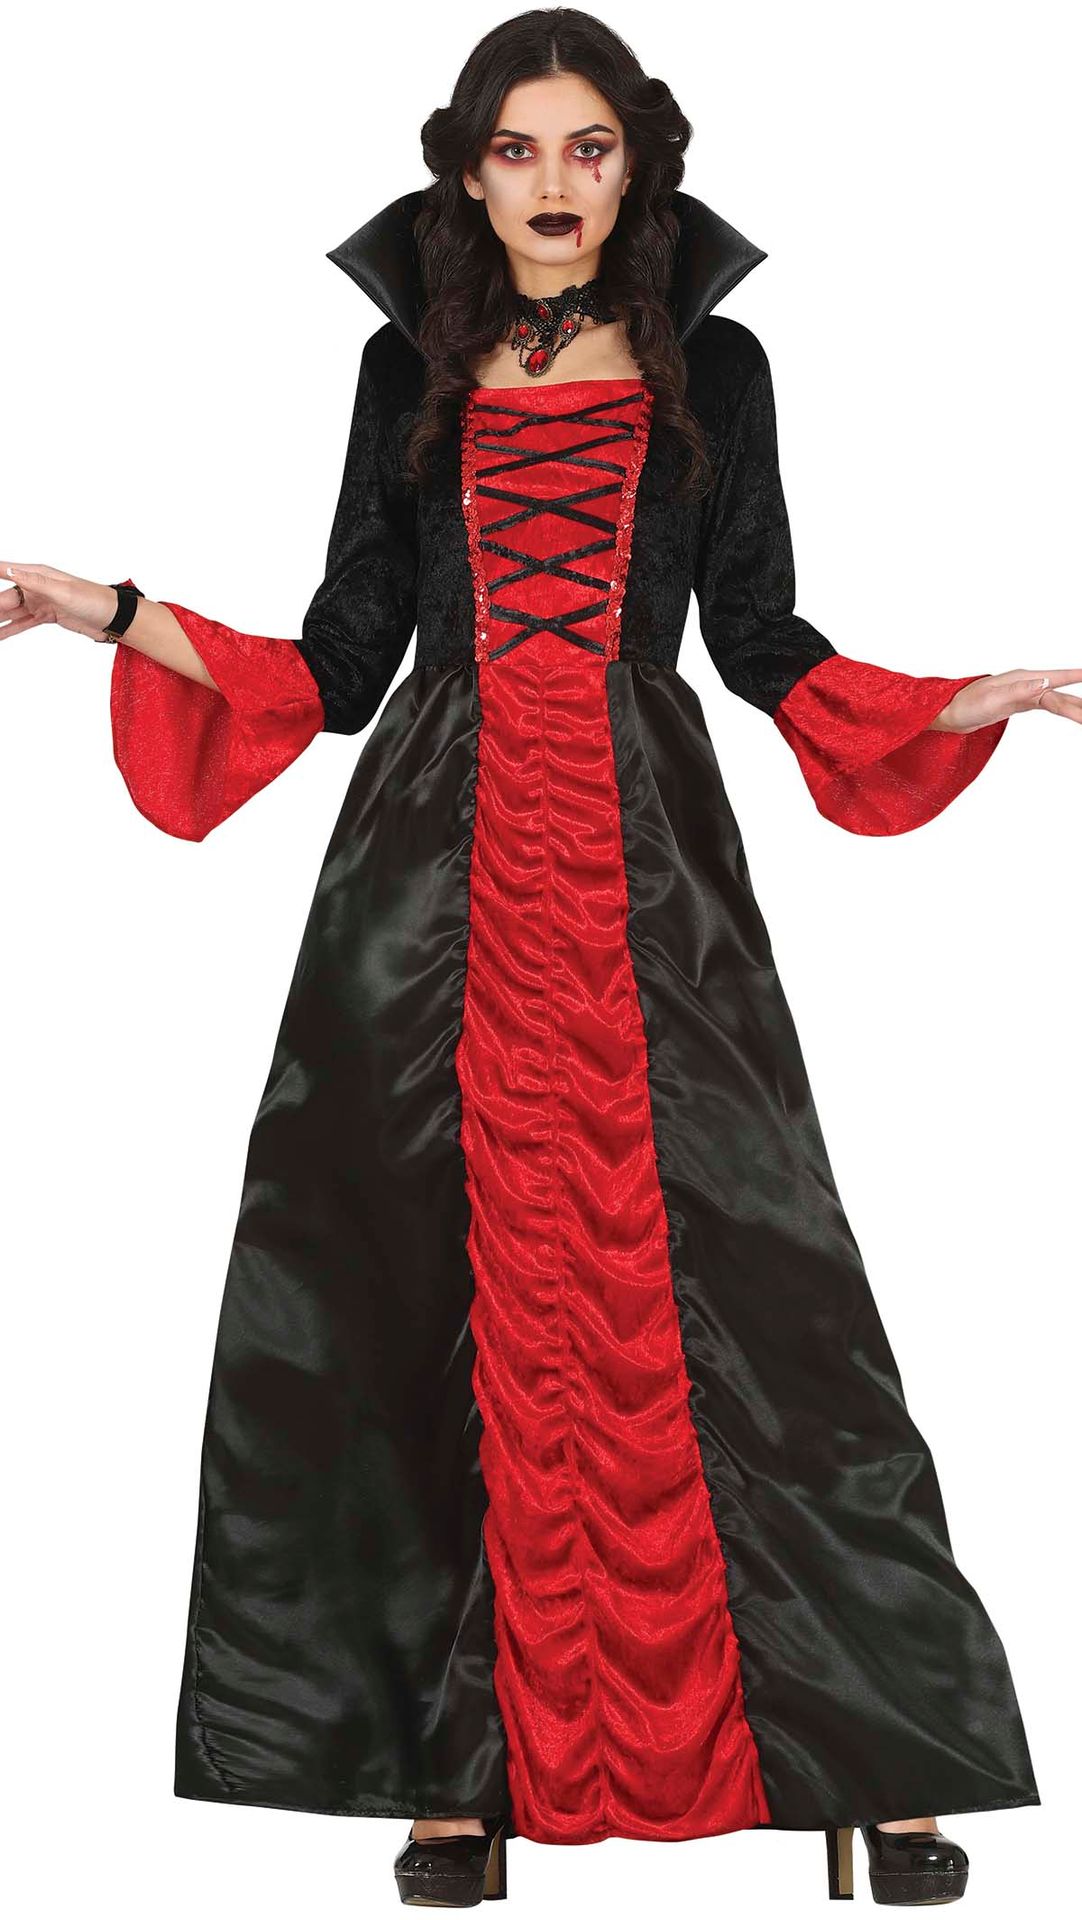 Rood zwarte vampier outfit dames